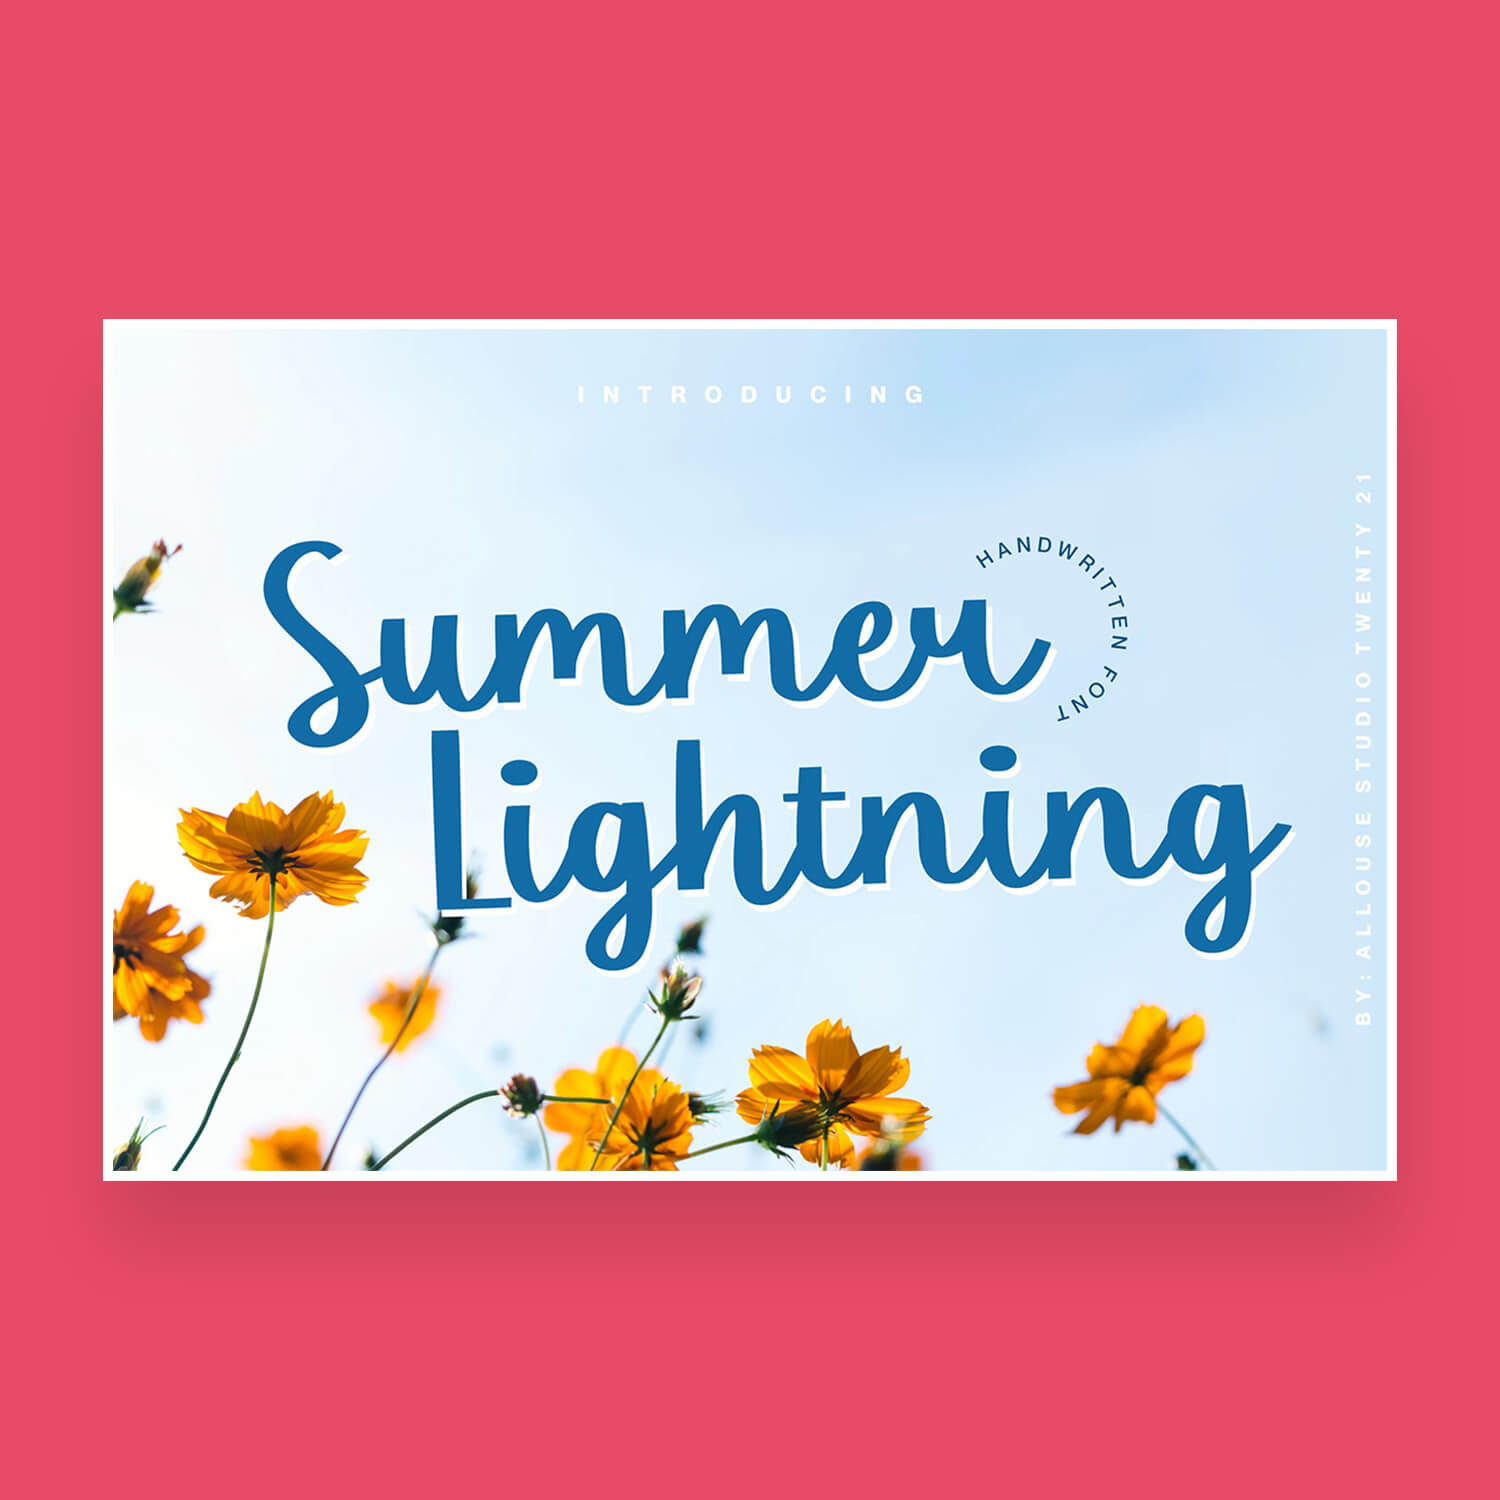 summer lightning amazing handwritten font cover image.